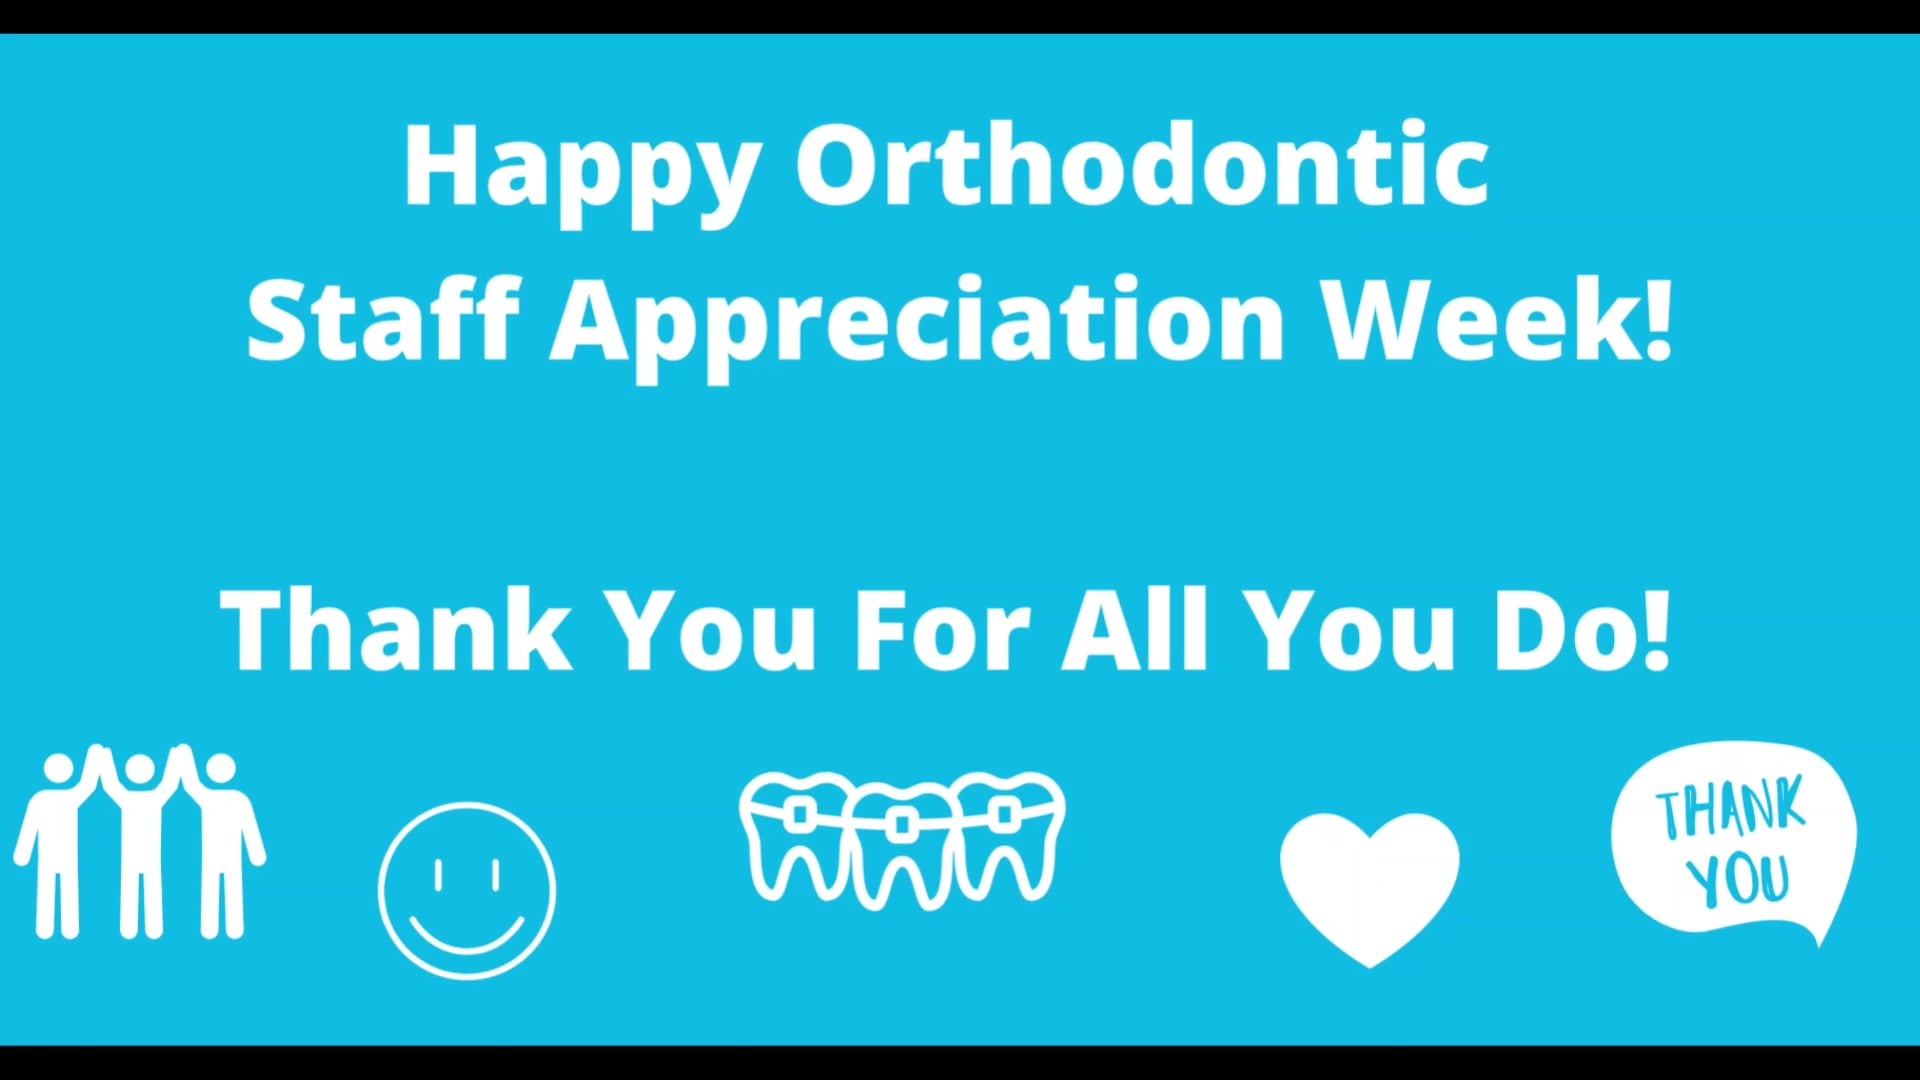 Orthodontic Staff Appreciation Week 2021 on Vimeo